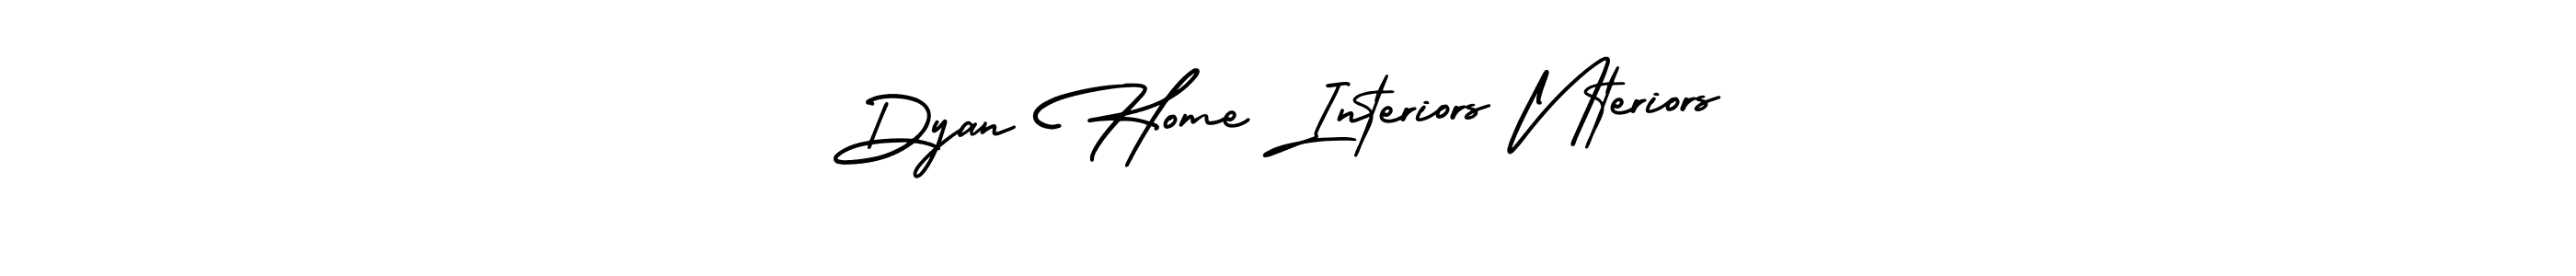 Create a beautiful signature design for name Dyan Home Interiors Nteriors. With this signature (AmerikaSignatureDemo-Regular) fonts, you can make a handwritten signature for free. Dyan Home Interiors Nteriors signature style 3 images and pictures png